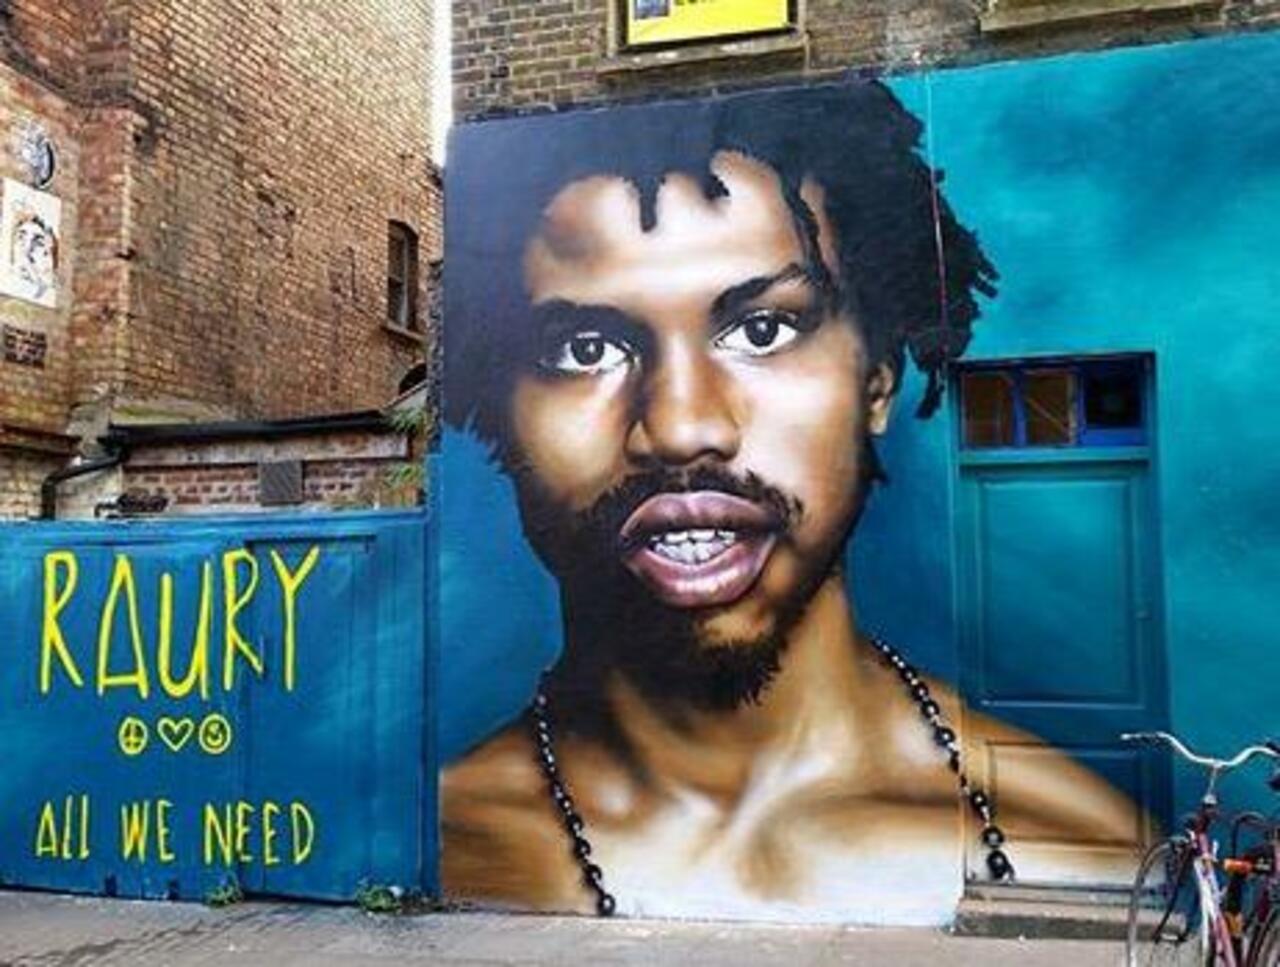 New Street Art of Raury by Olliver Switch in Brick Lane 

#art #graffiti #mural #streetart http://t.co/5NIAEhwr94